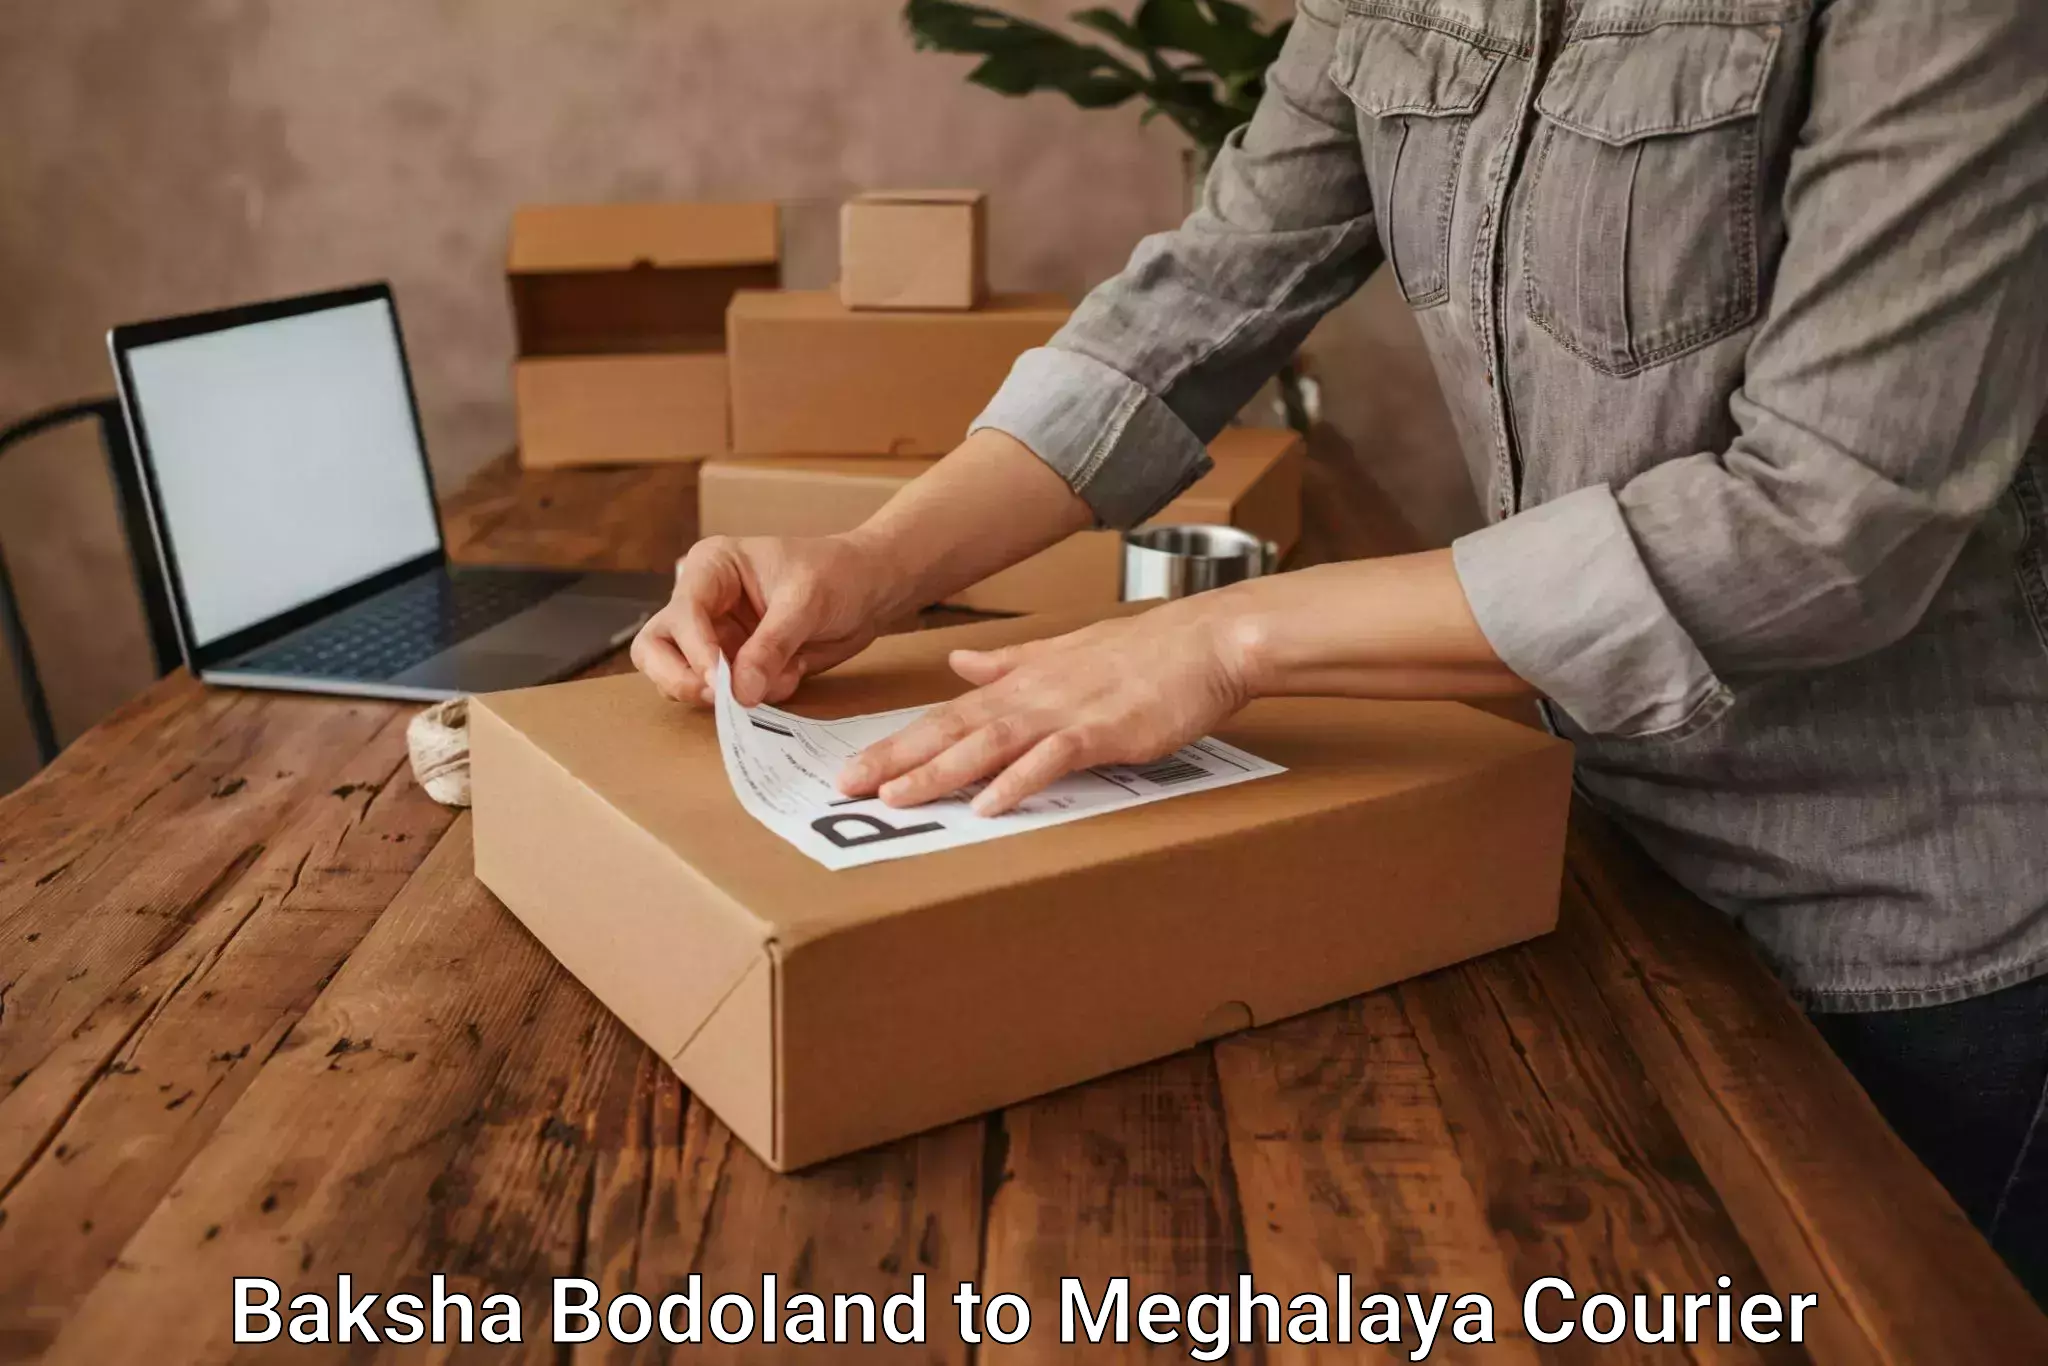 Modern courier technology Baksha Bodoland to Shillong